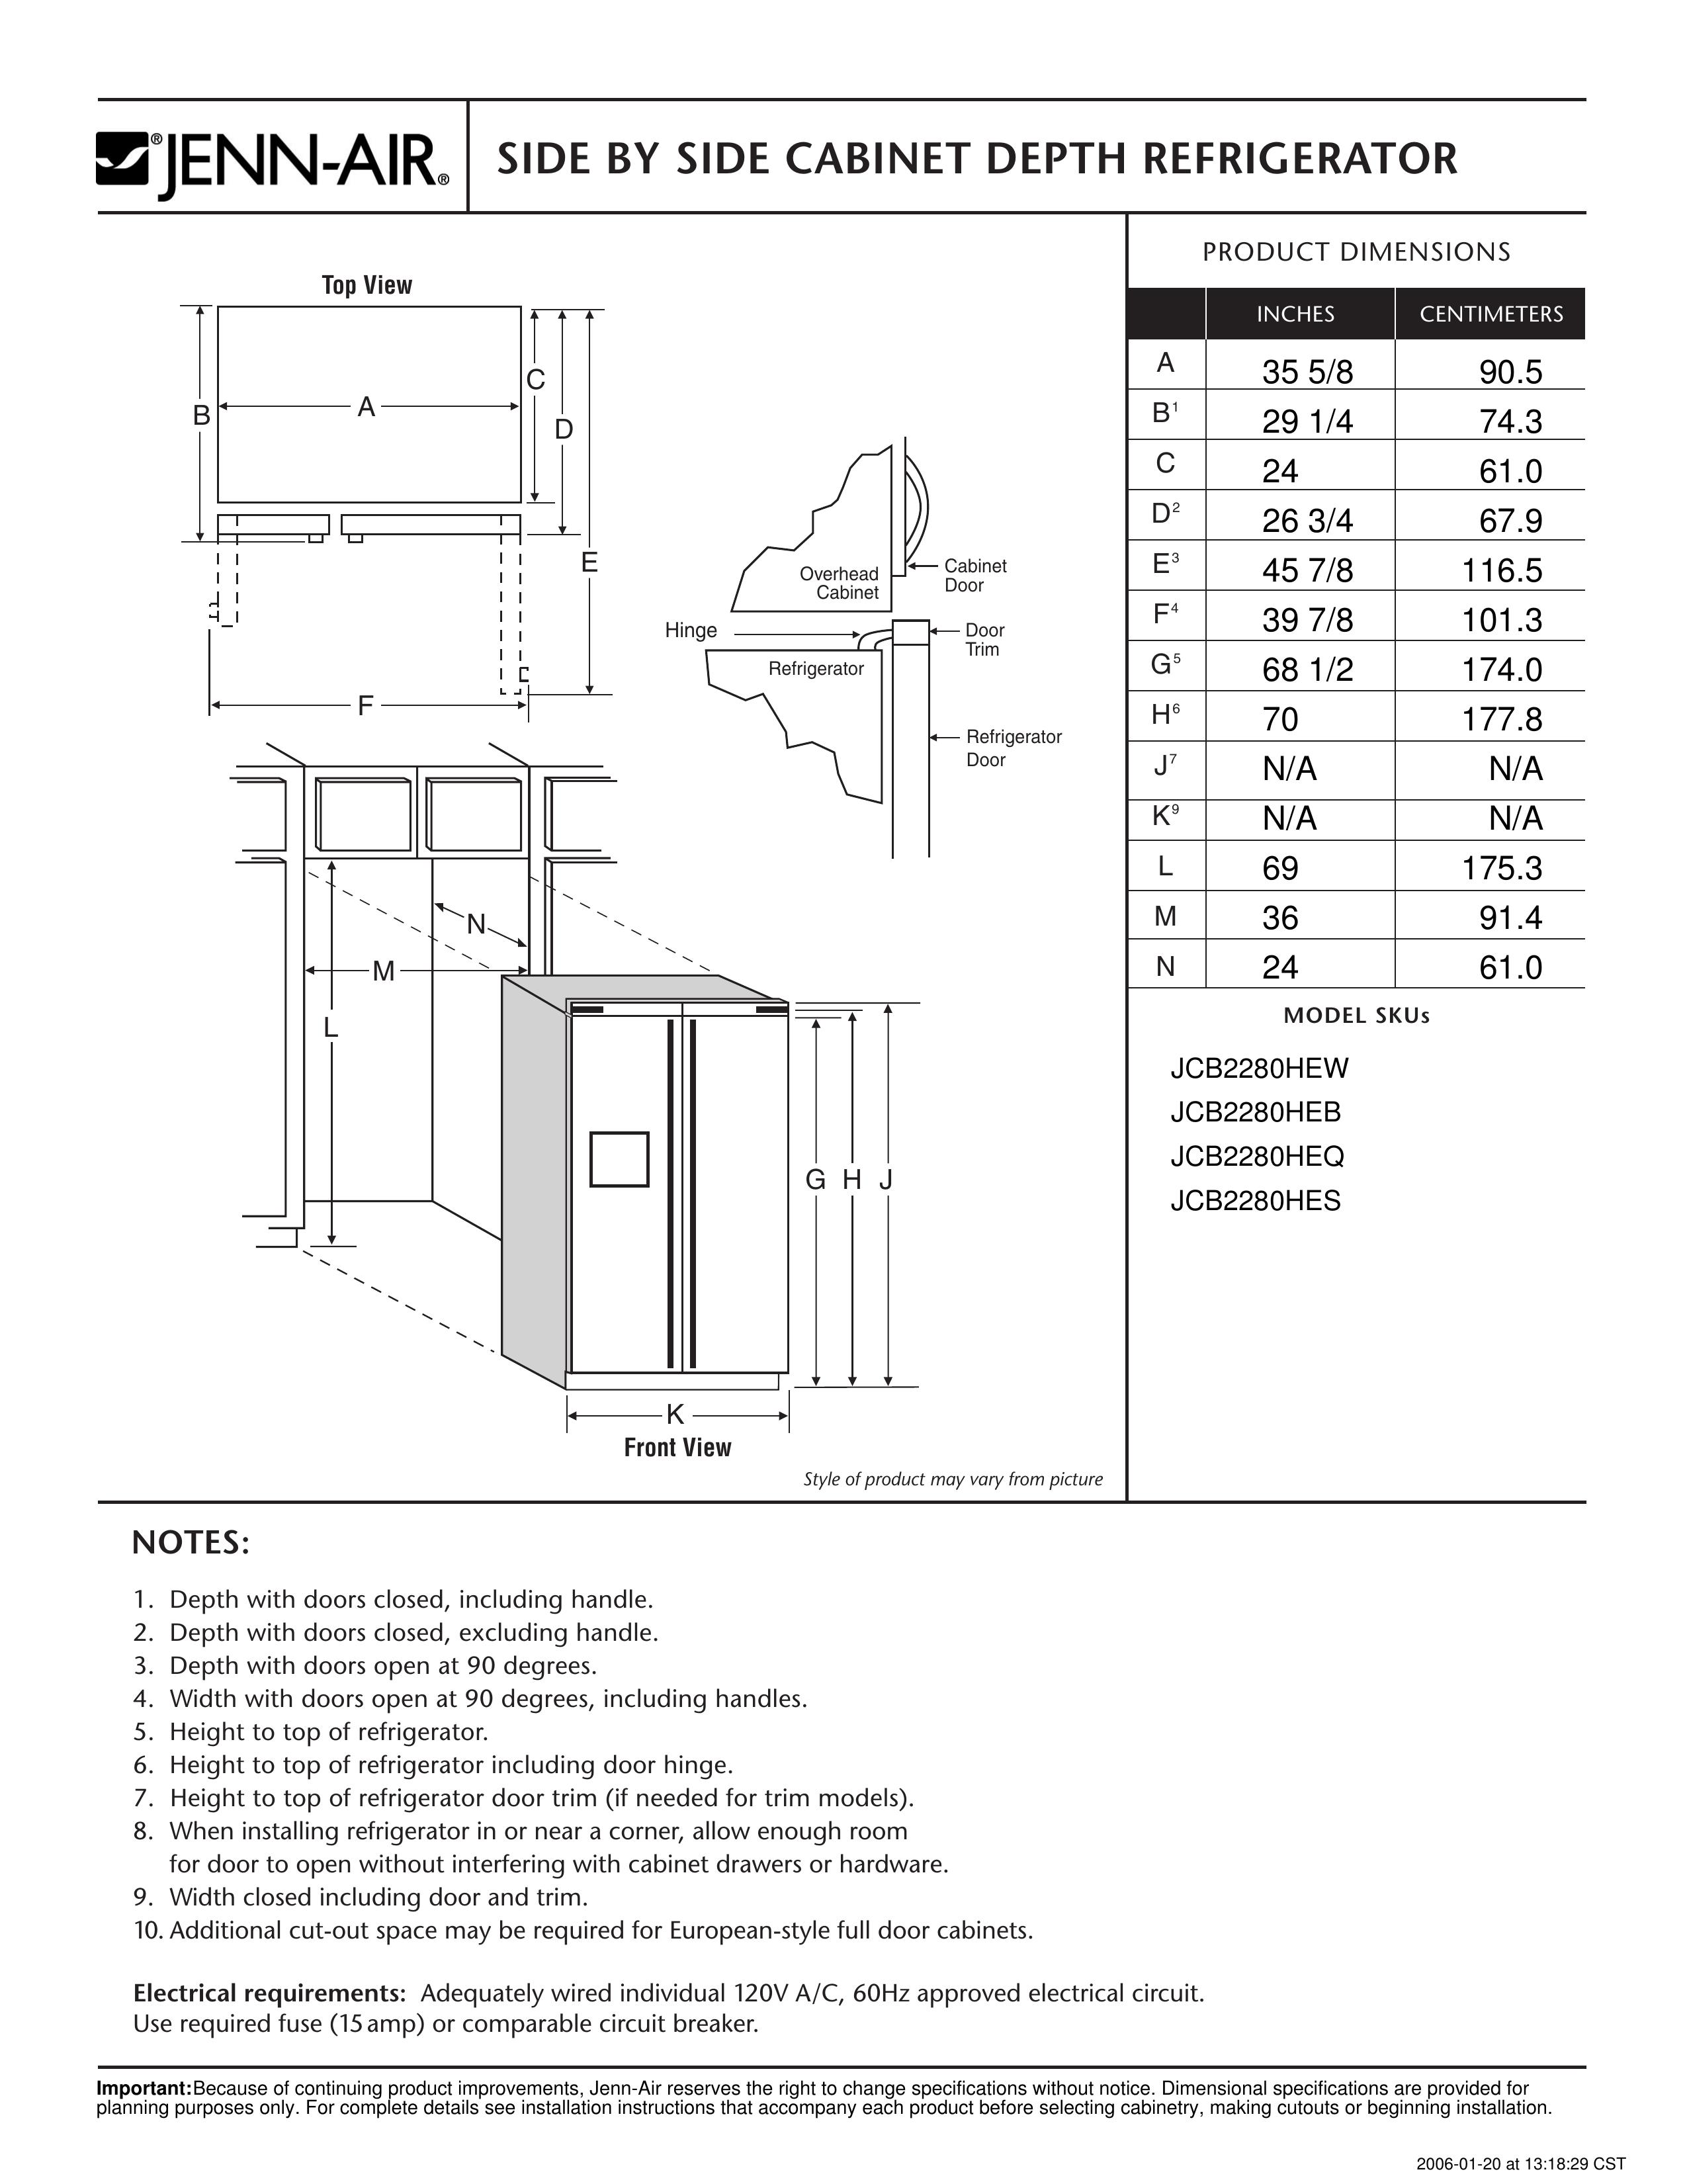 Jenn-Air JCB2280HEQ Refrigerator User Manual